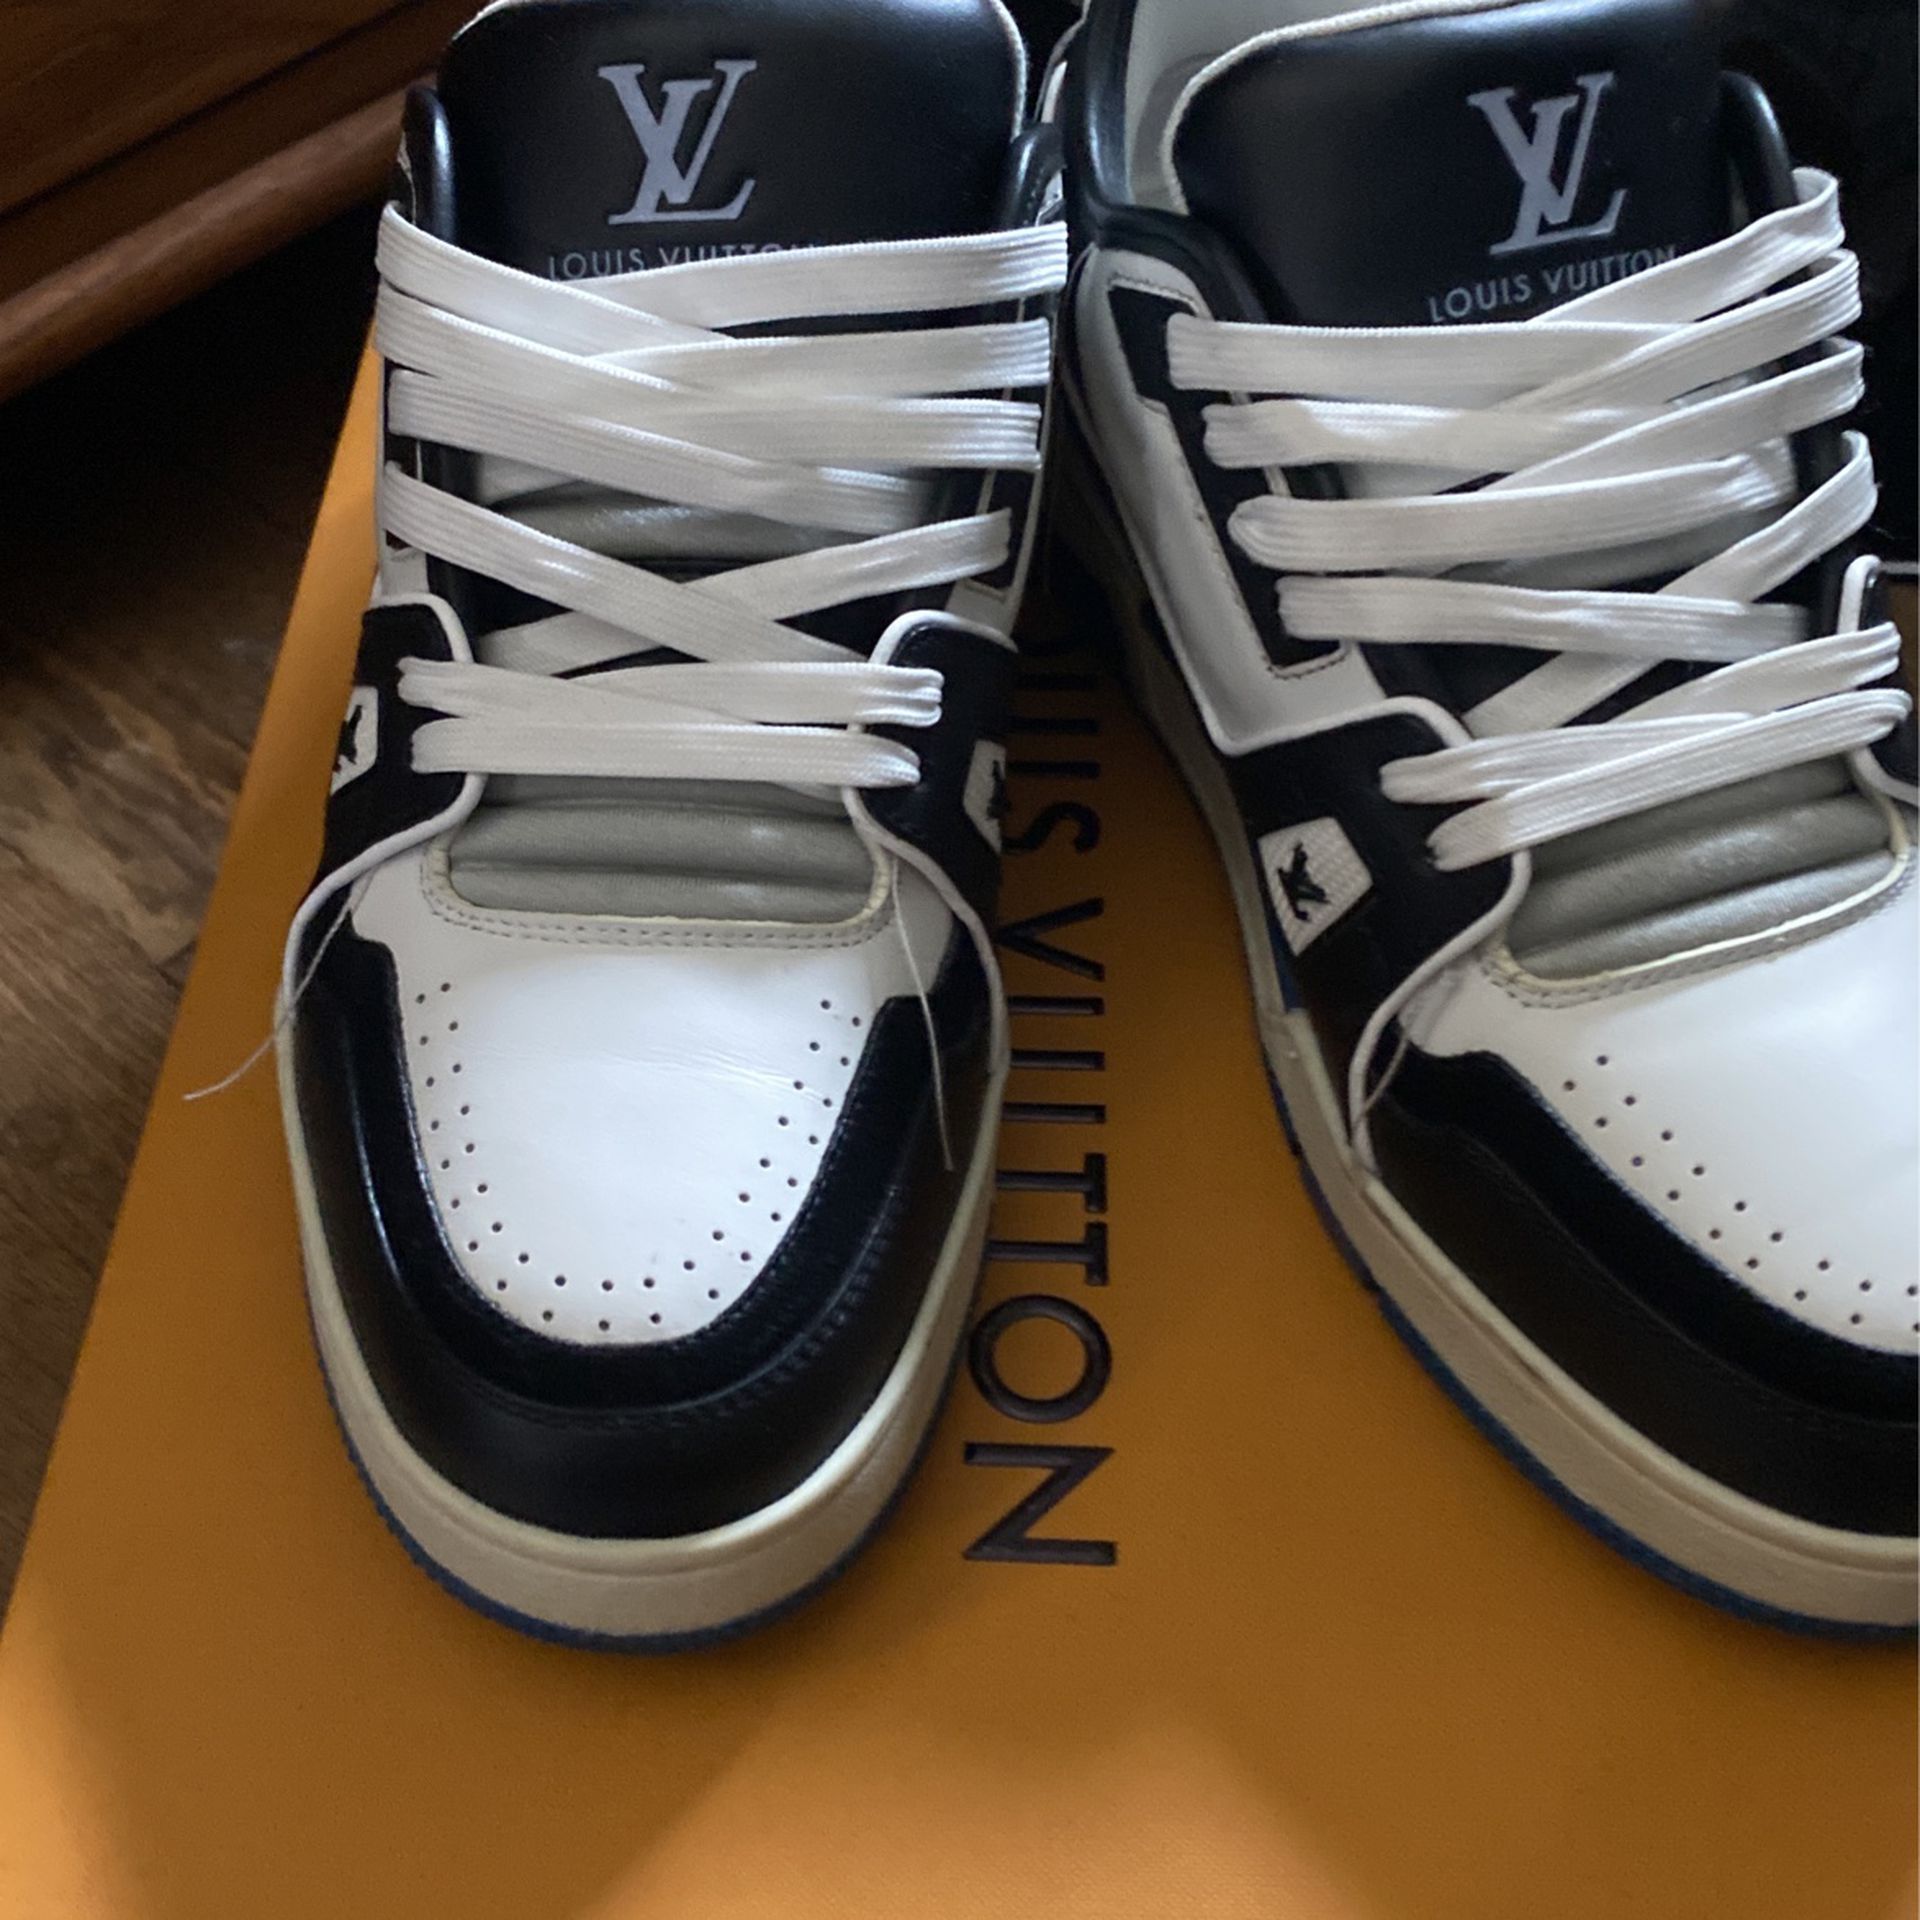 SALEOFF Louis Vuitton LV Trainer White Sneaker - USALast